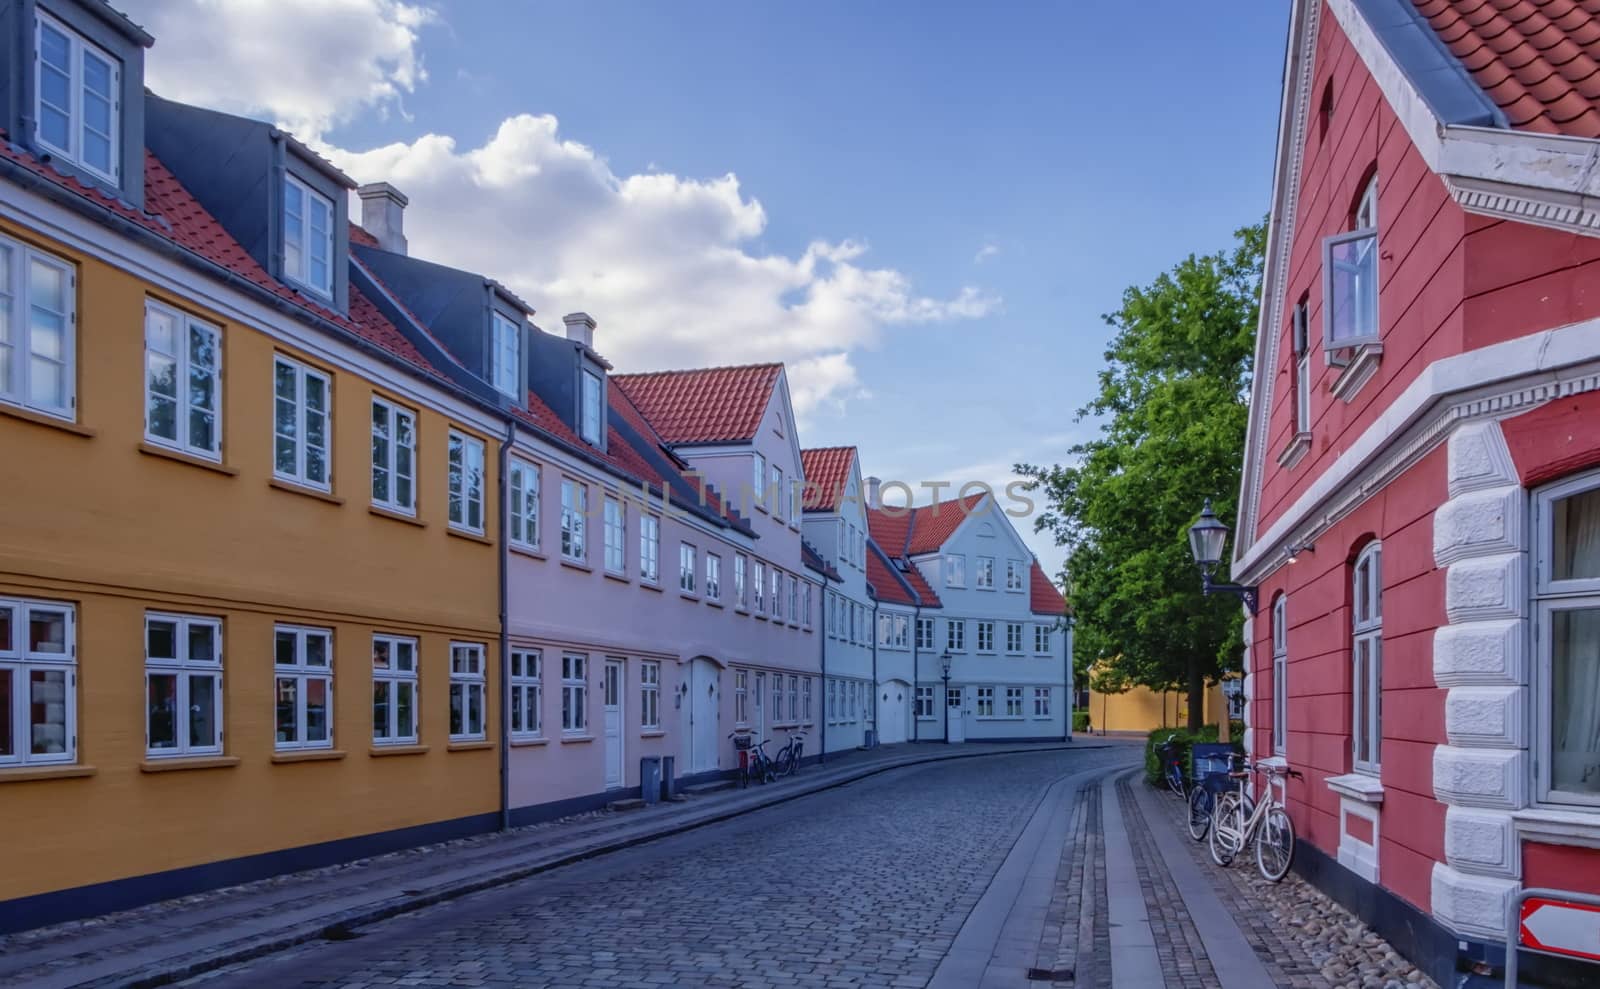 Street in medieval city of Ribe, Denmark by Elenaphotos21